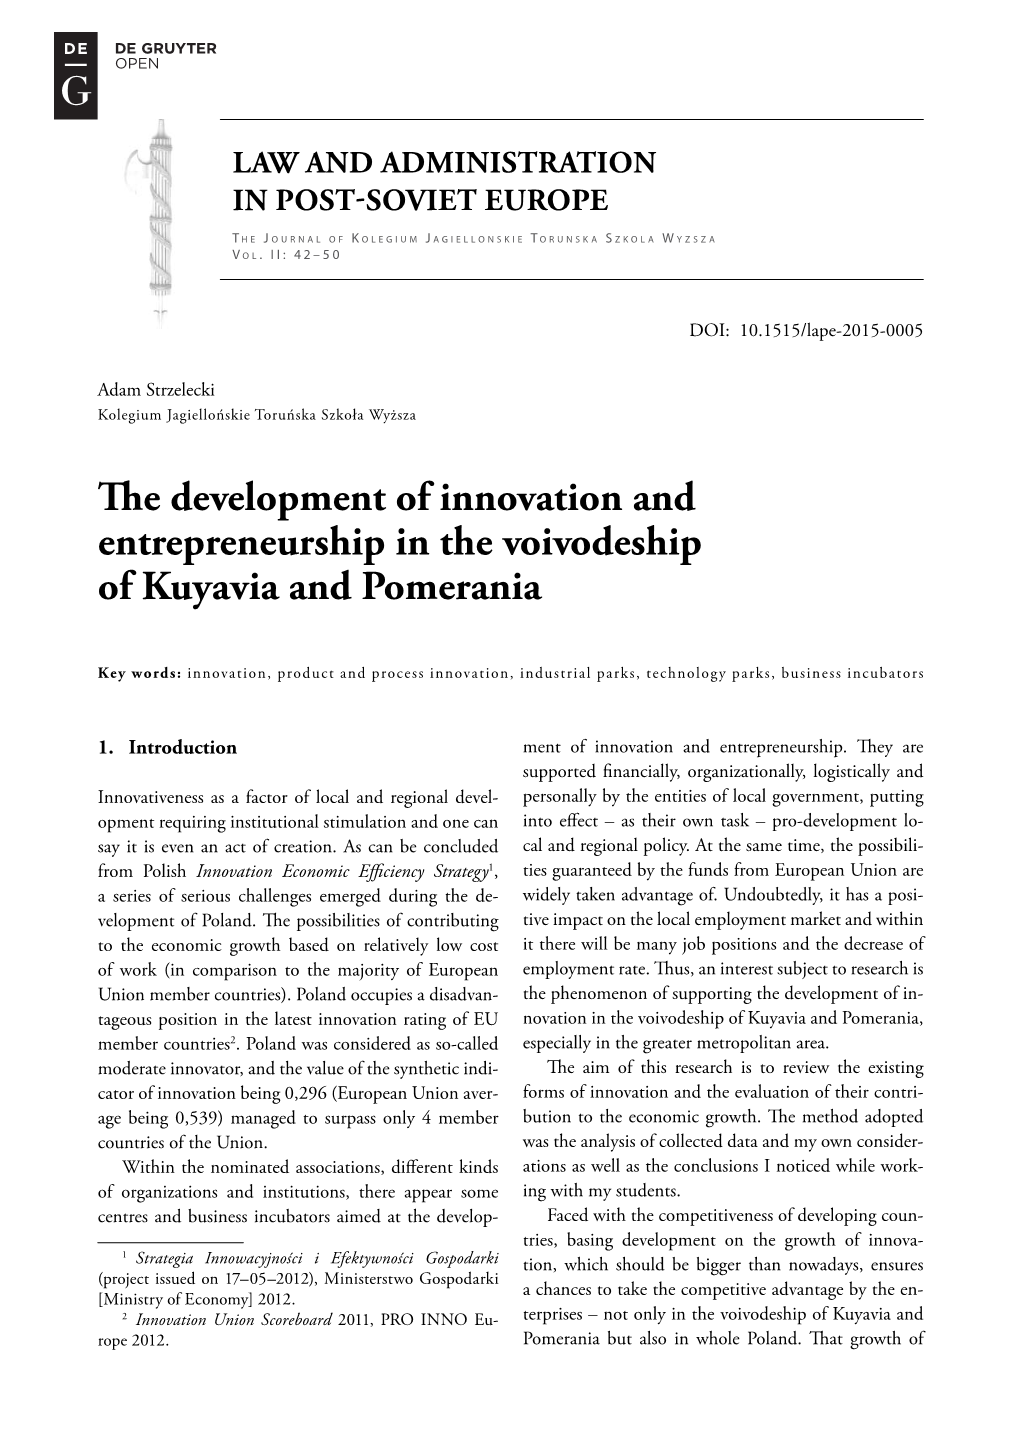 The Development of Innovation and Entrepreneurship in The